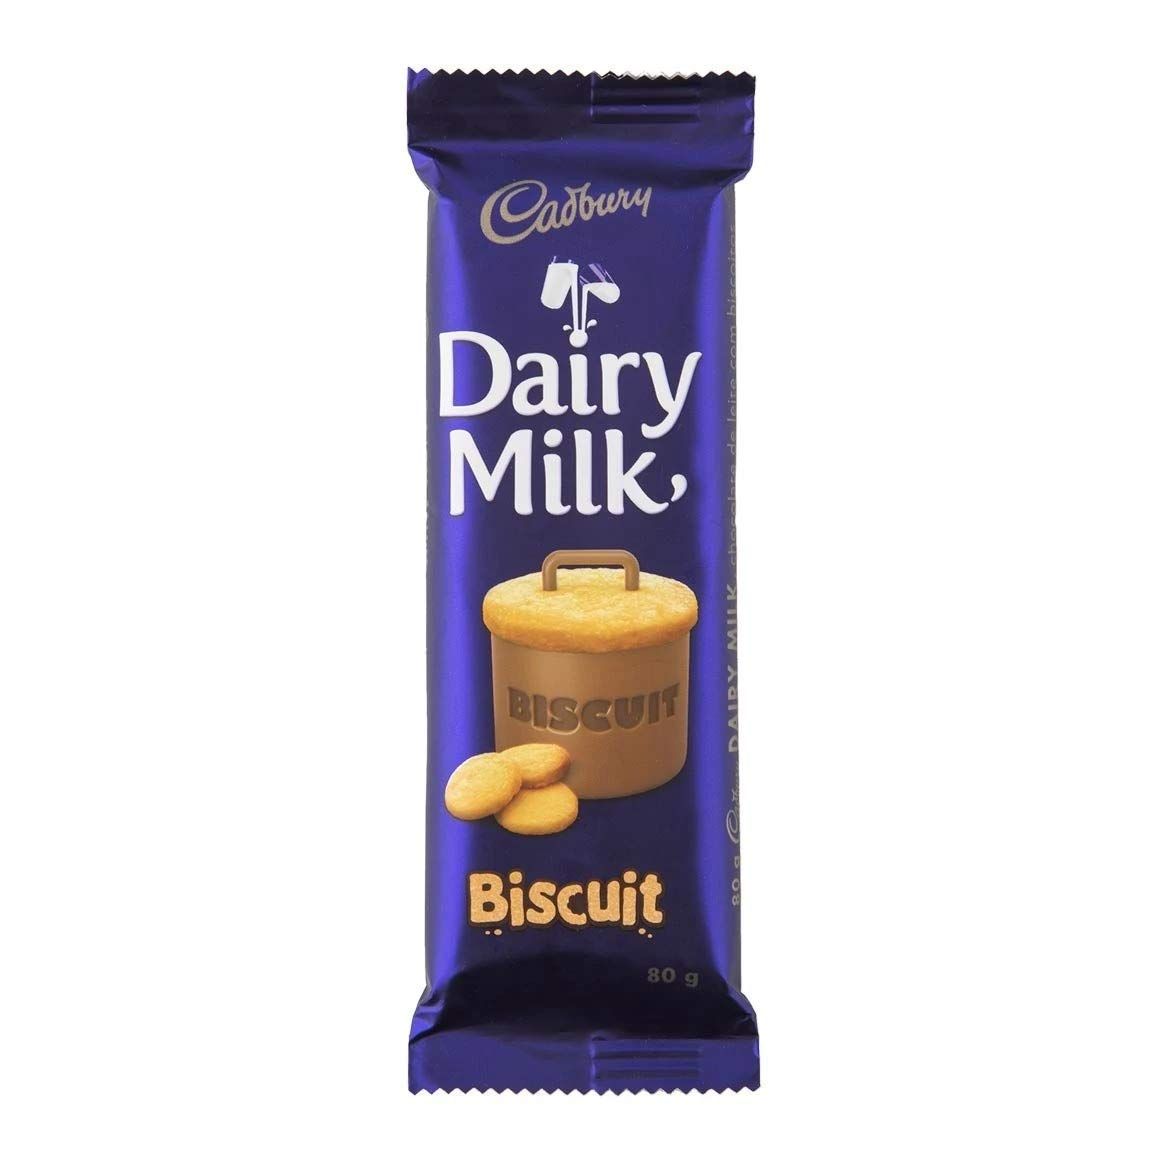 Cadbury Dairy Milk Biscuit Chocolate Bar Image